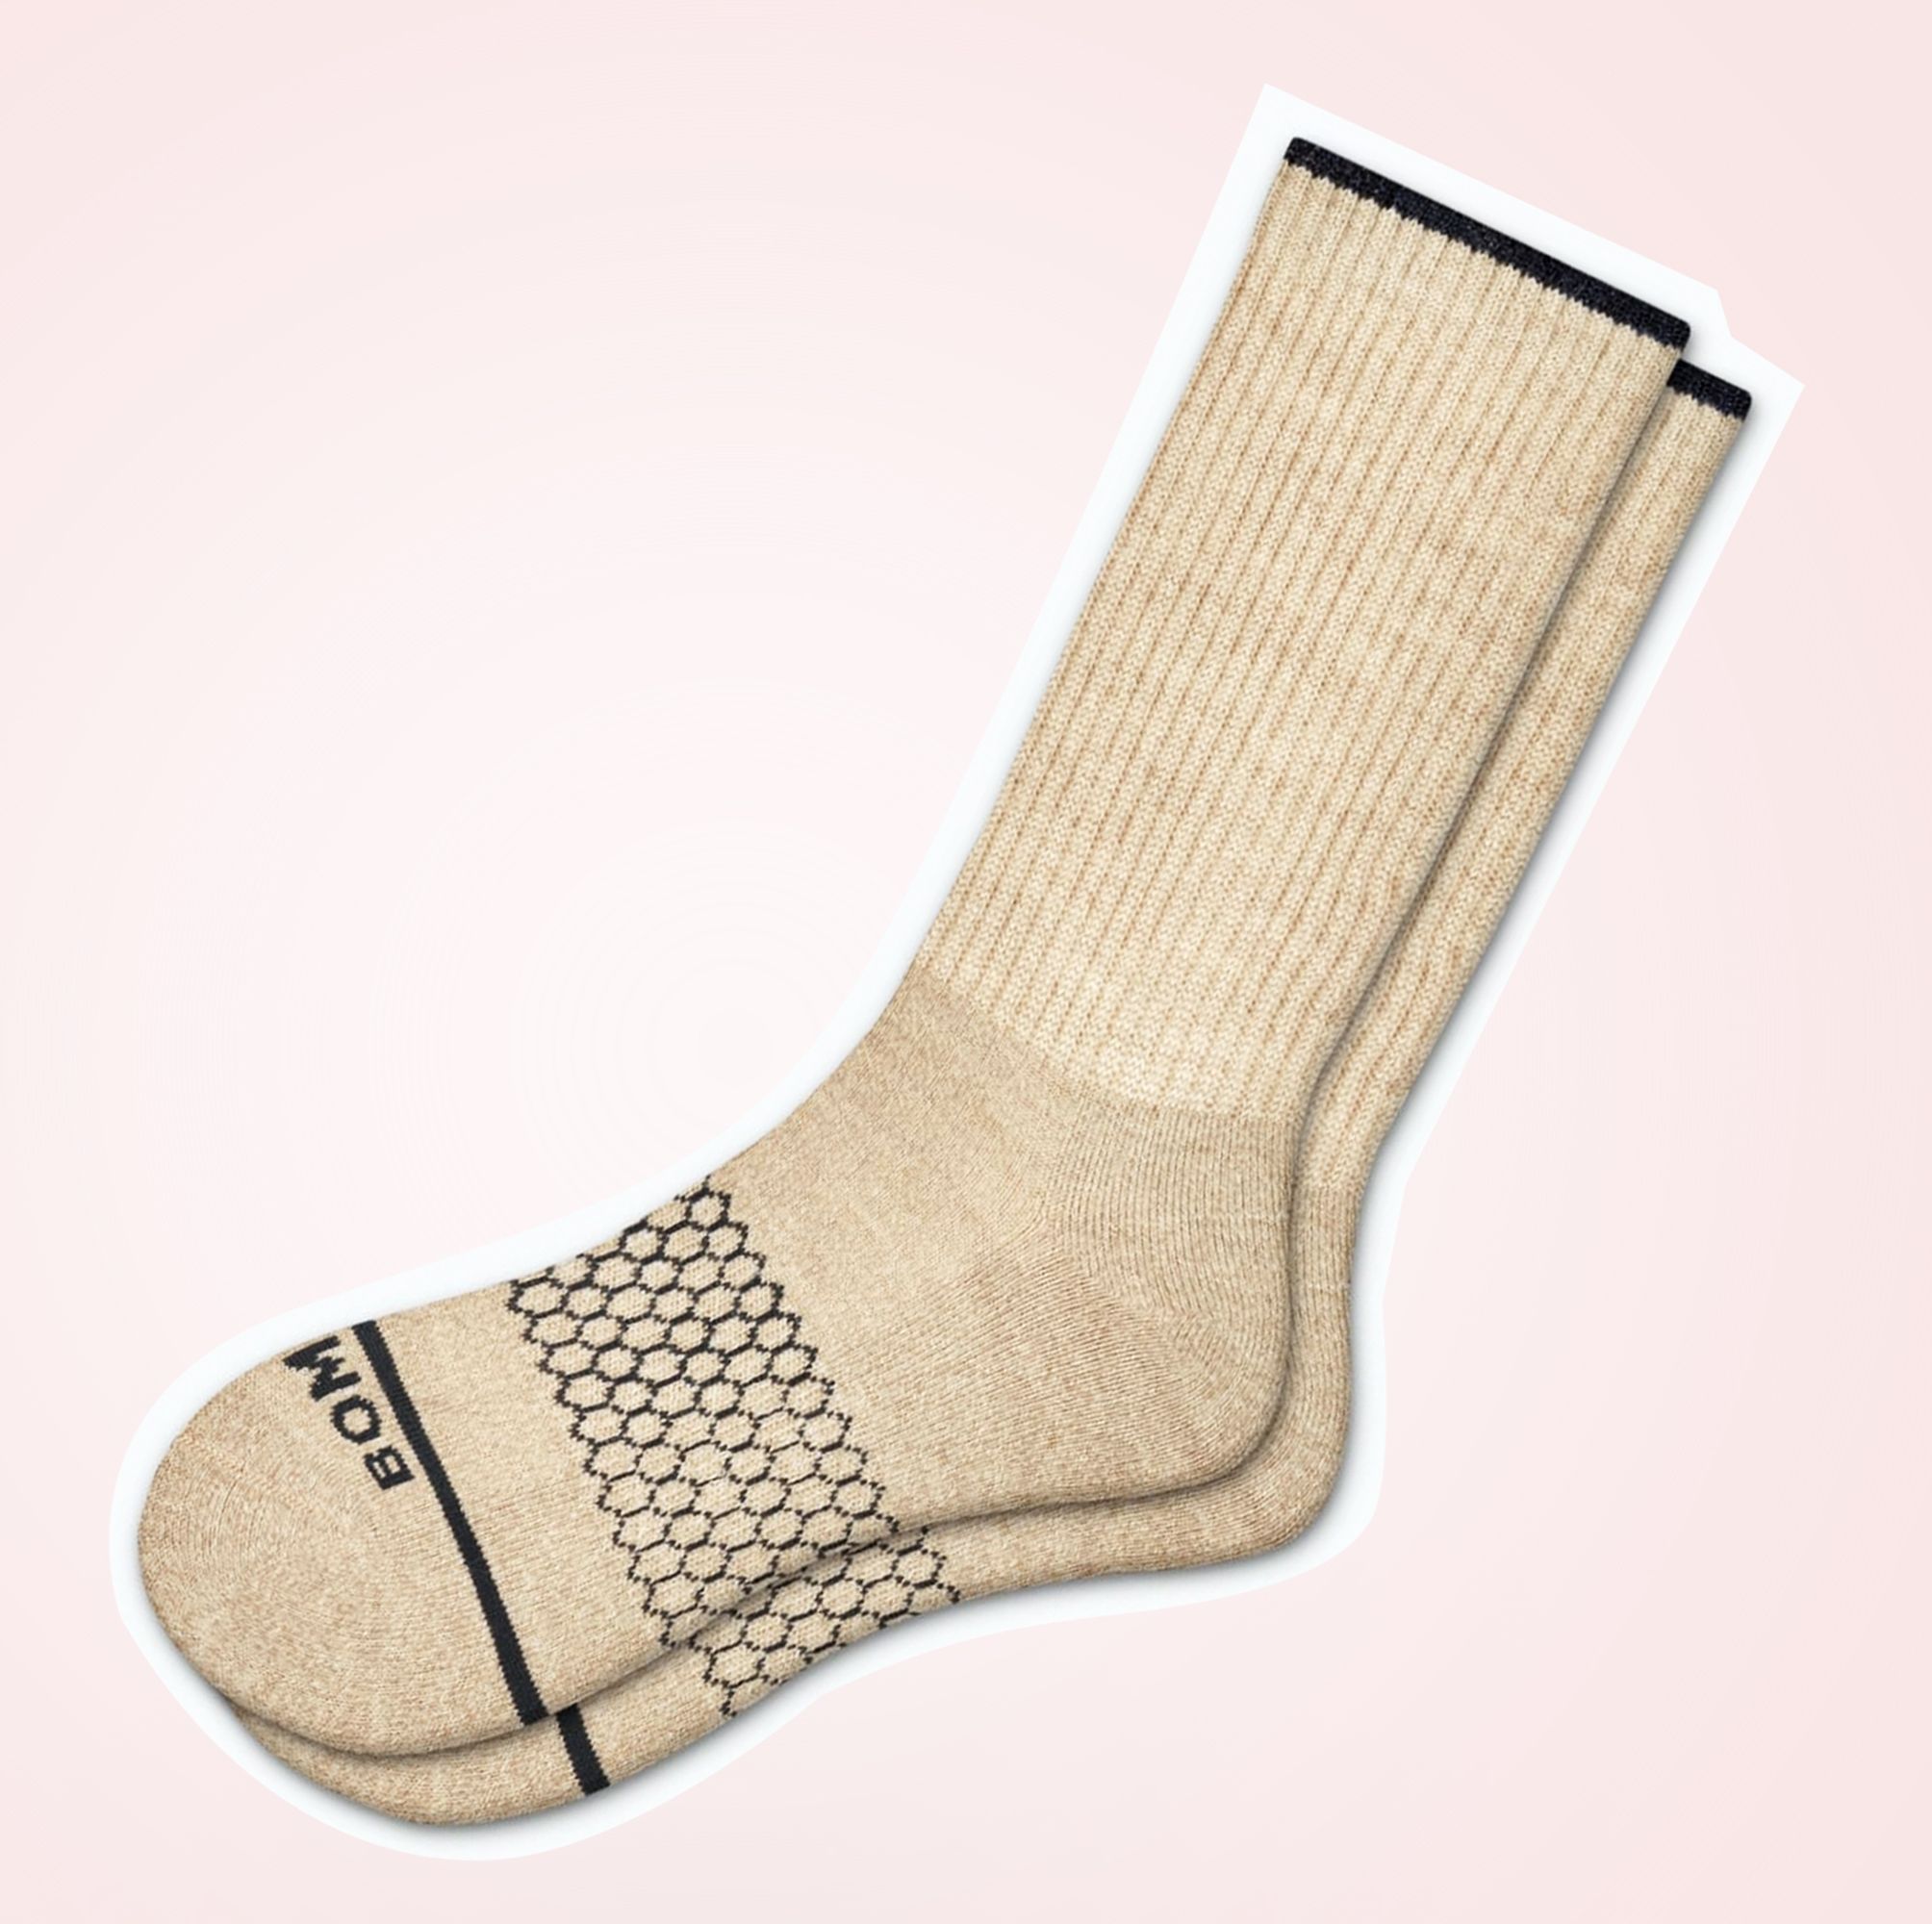 The Warmest Socks for Winter Will Keep Your Feet Cozy All Season Long